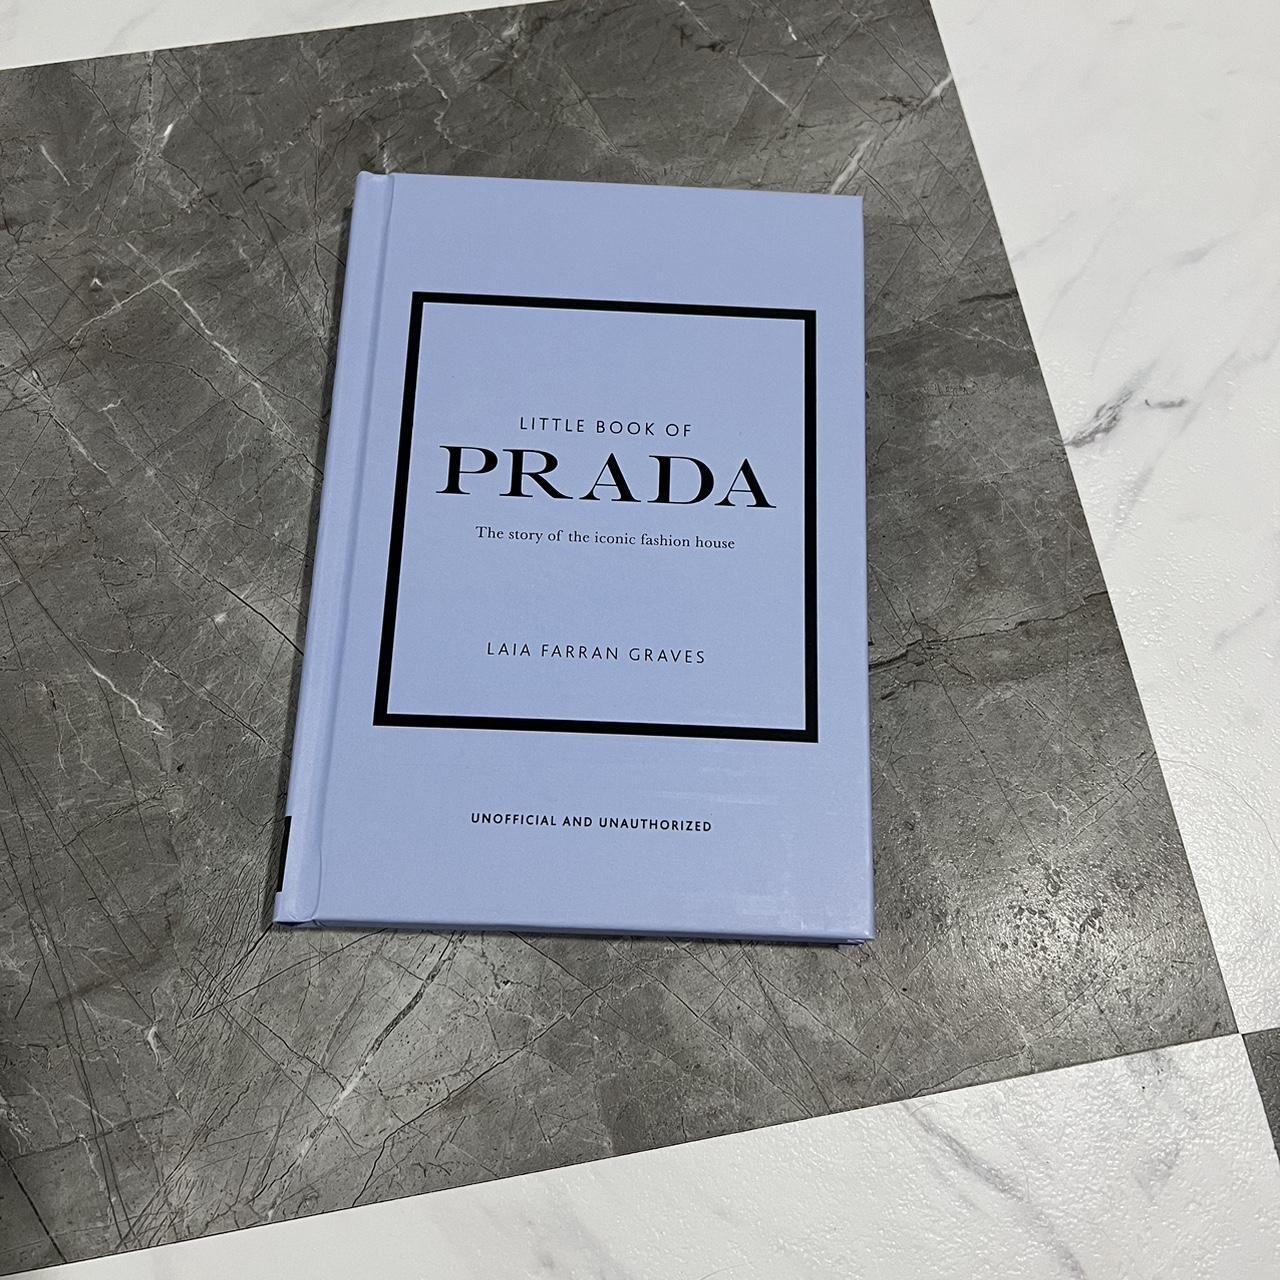 Prada coffee table book 7.5 in tall x 5in wide All... - Depop